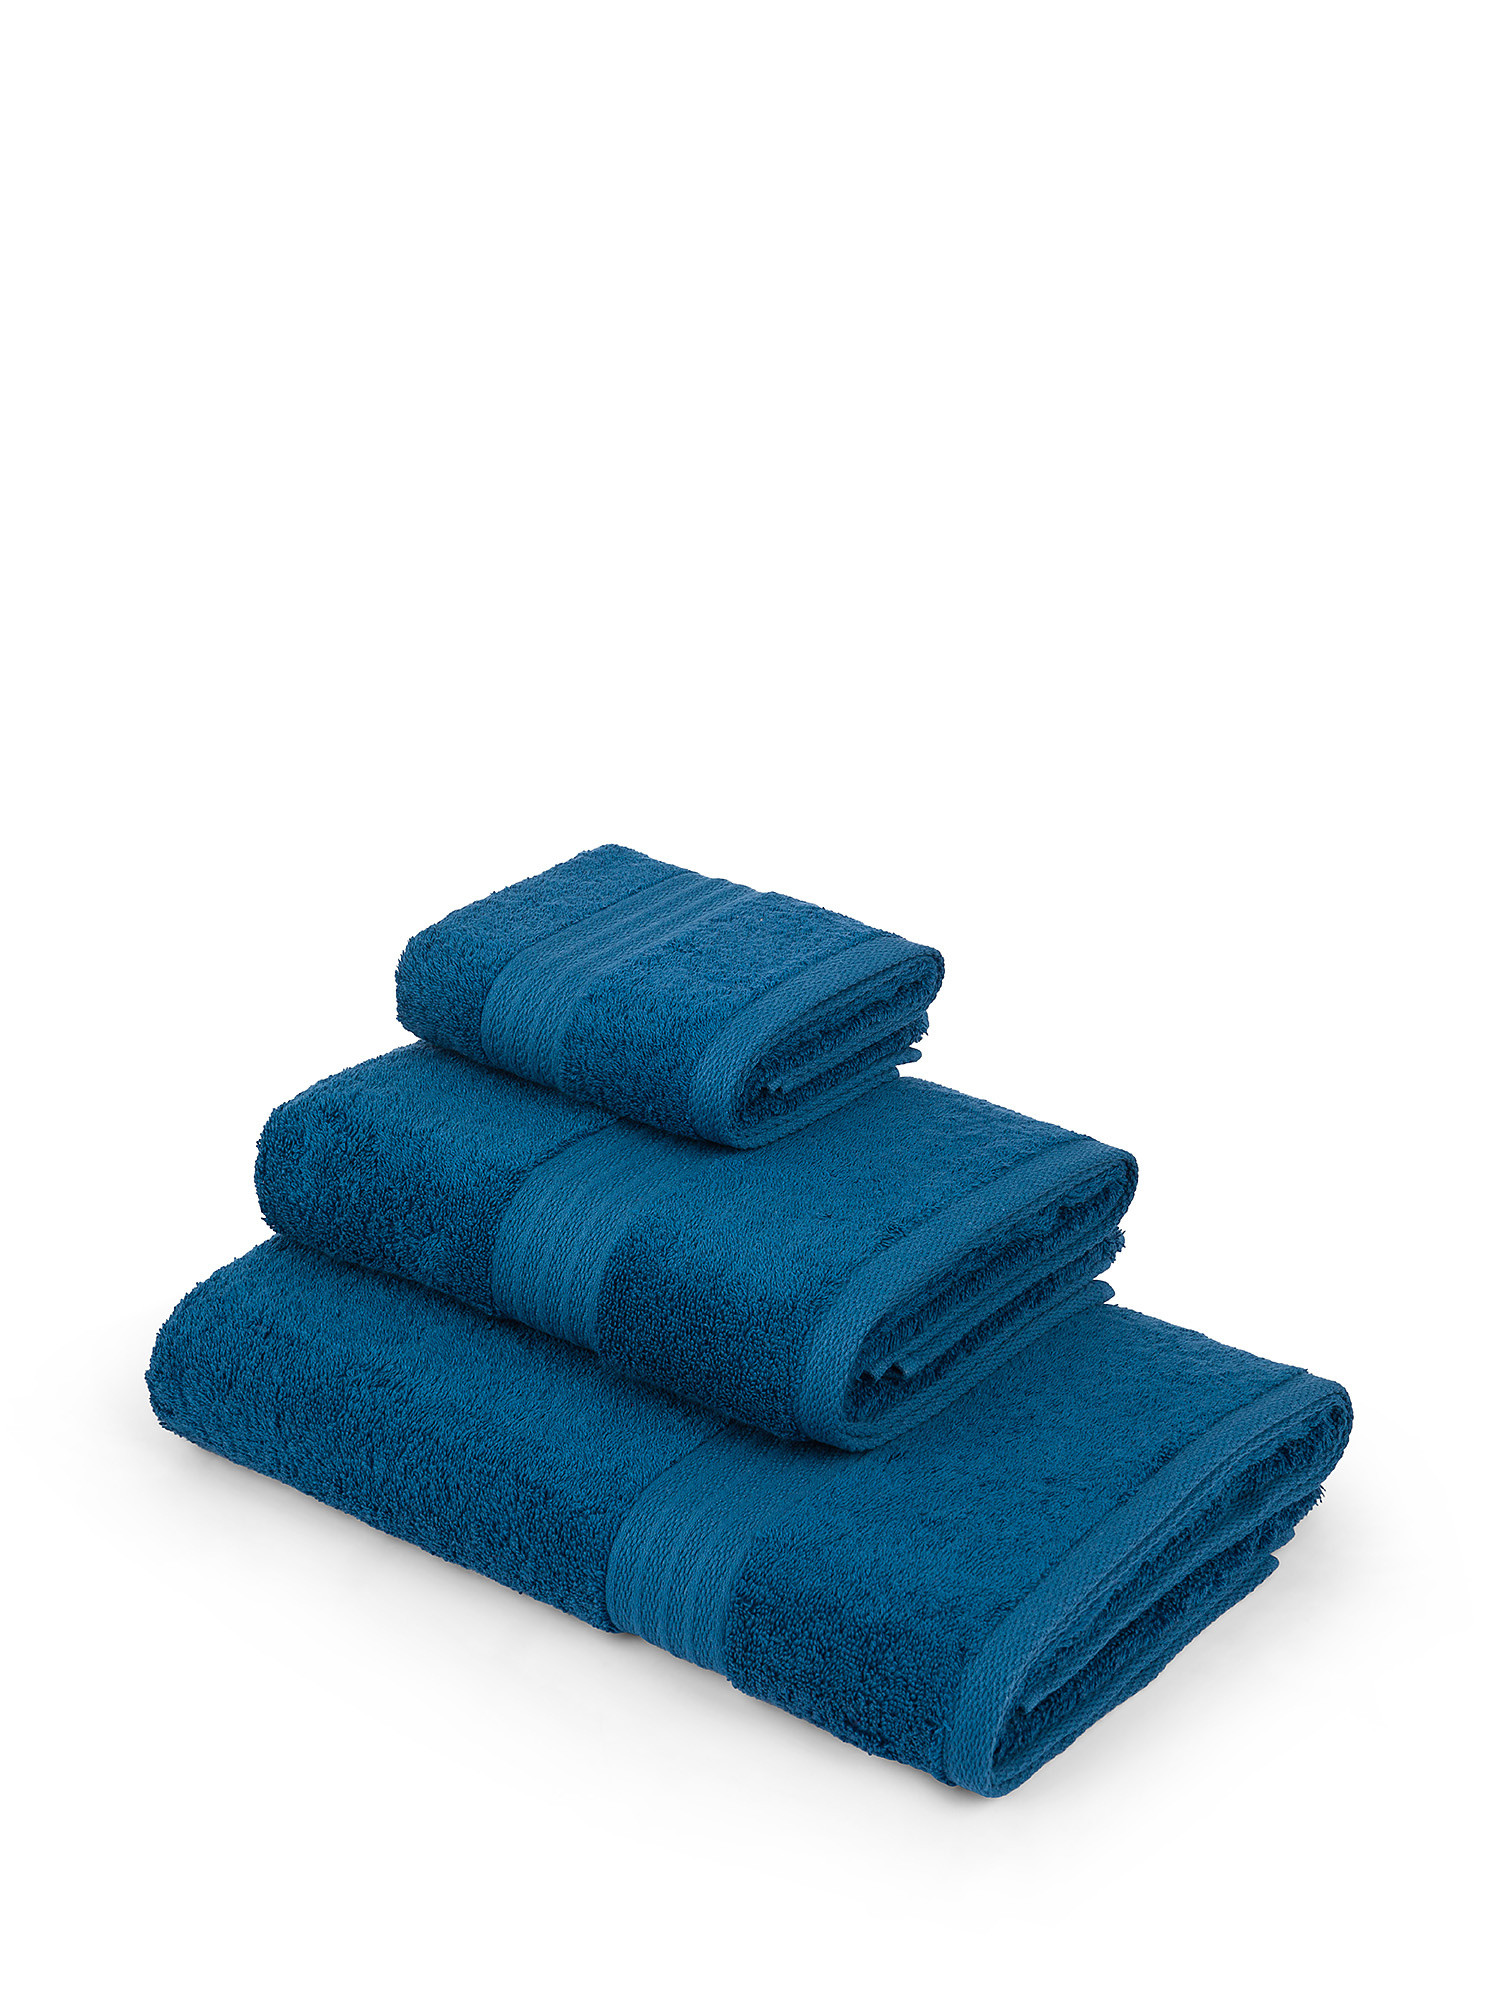 Zefiro solid color 100% cotton towel, Blue, large image number 0